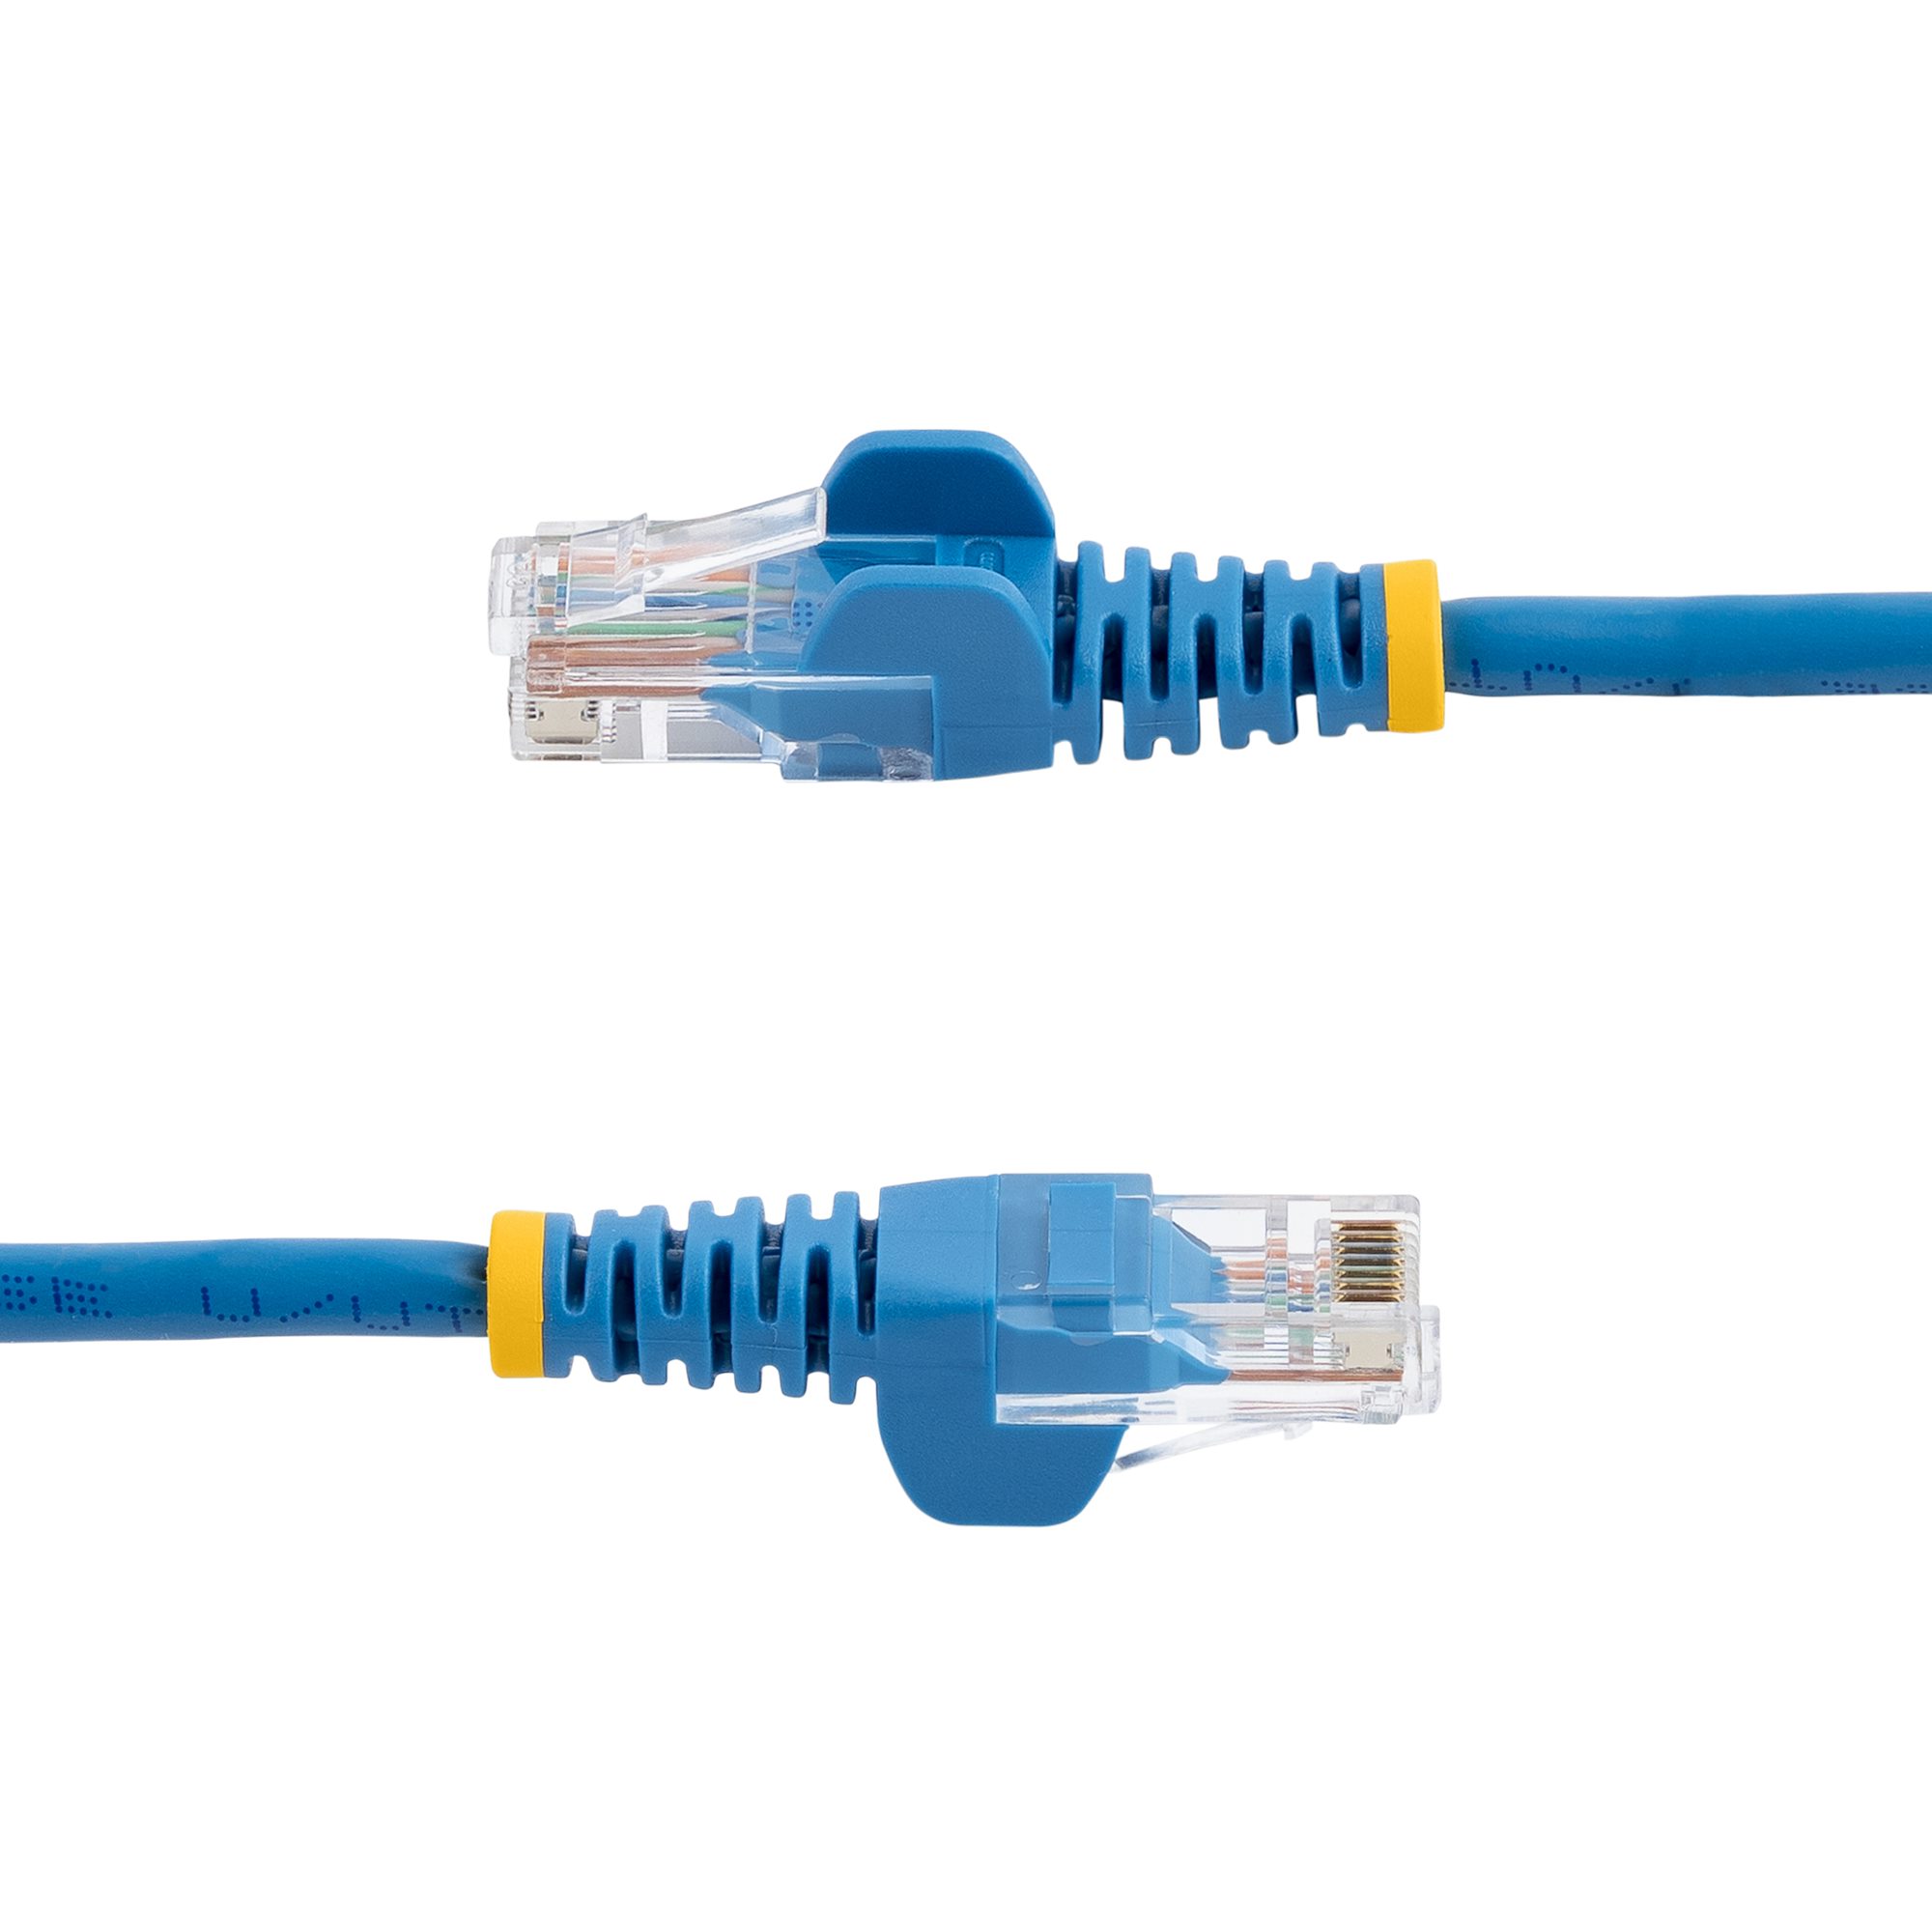 StarTech.com CAT5e Cable - 10 ft Blue Ethernet Cord - Snagless - CAT5e  Patch Cord - CAT5e UTP Cable - RJ45 Network Cable